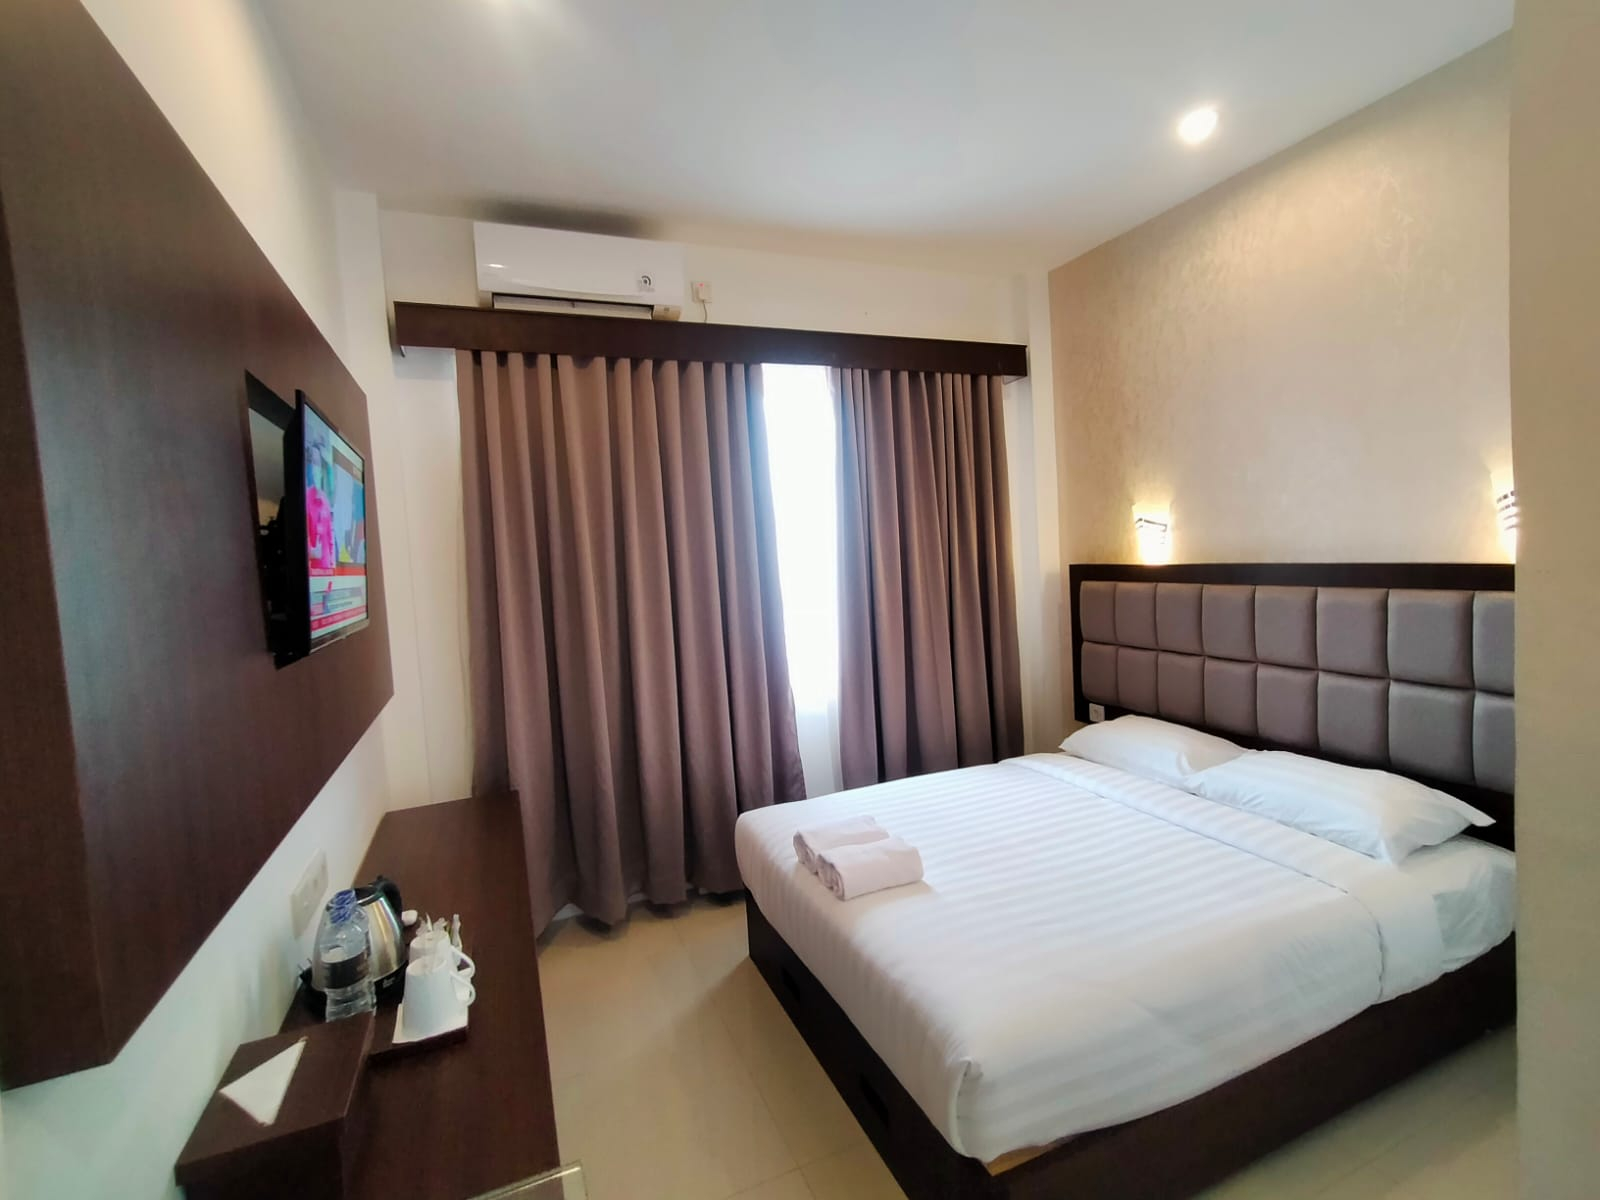 Bedroom 2, Tanahotel Padang, Padang